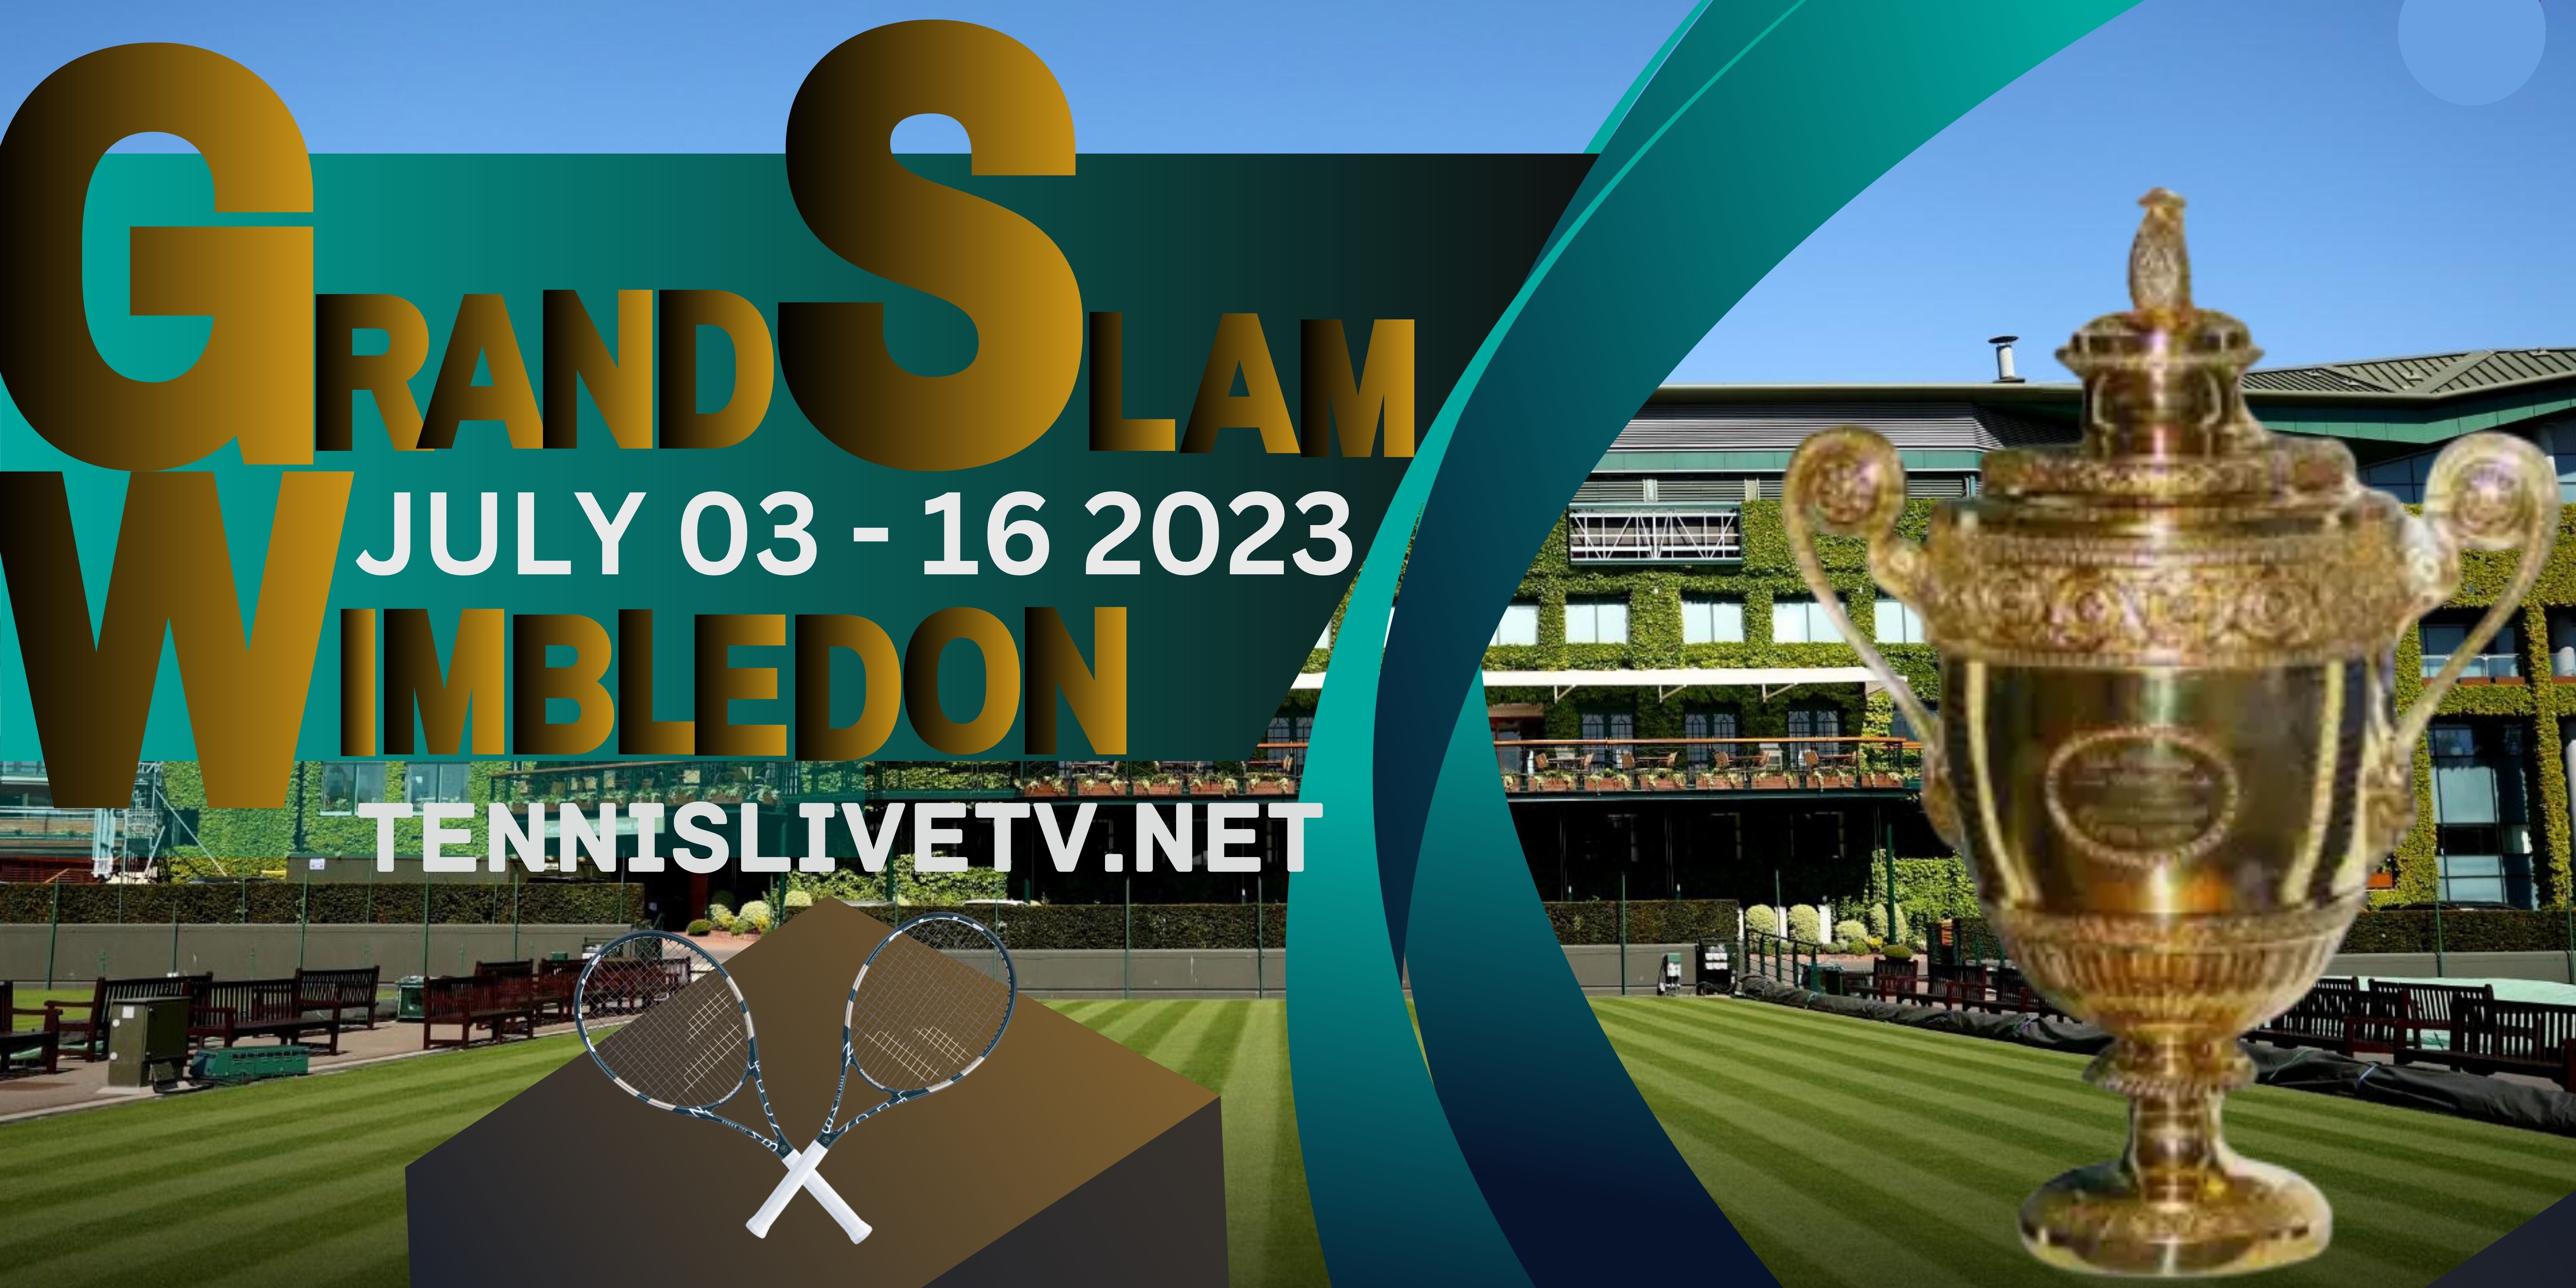 wimbledon-tennis-live-stream-schedule-players-list-how-to-watch